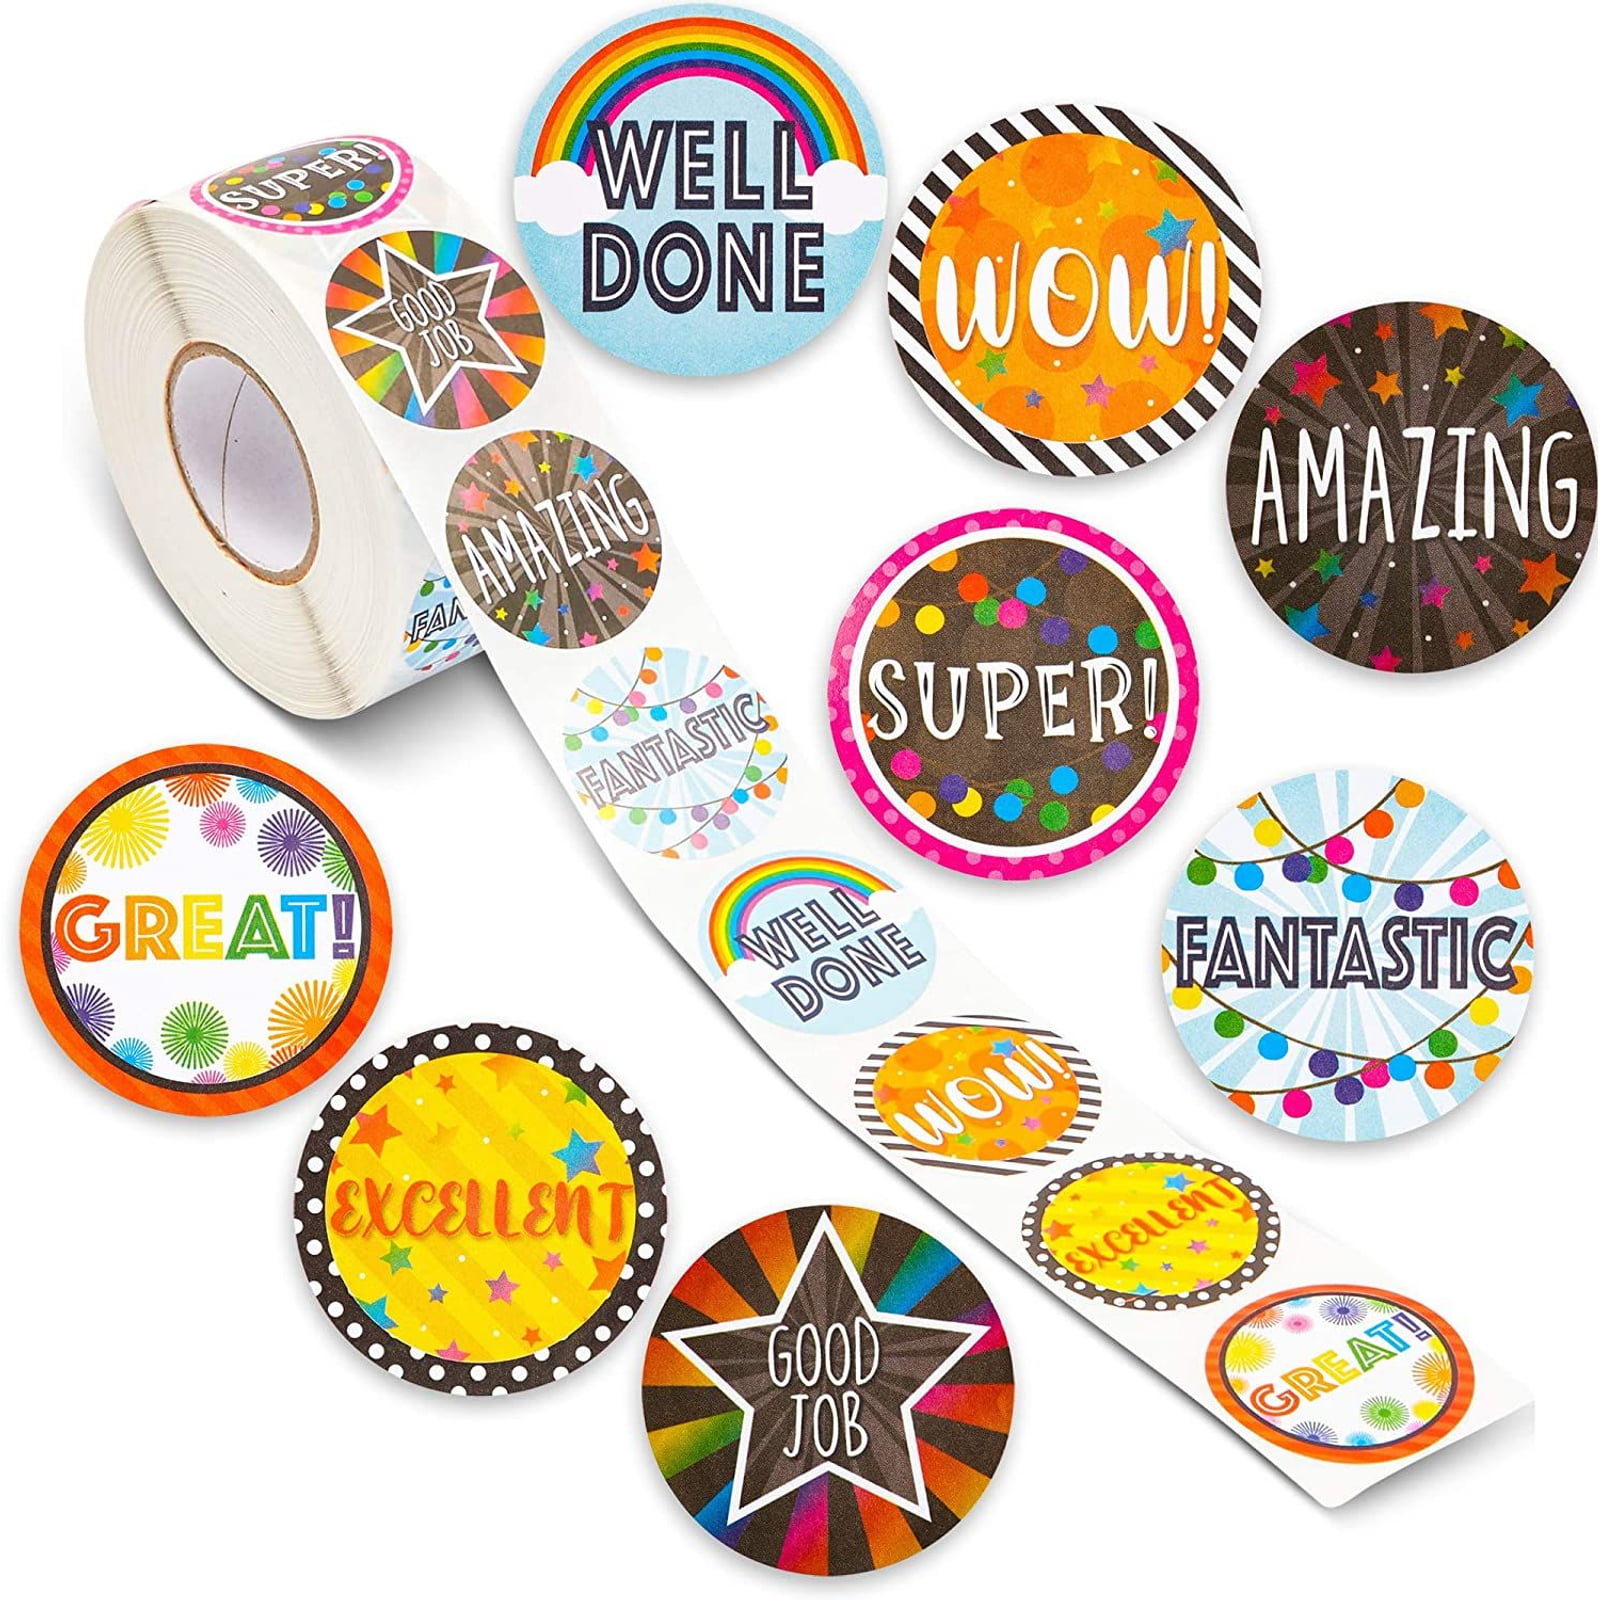 sorliva 1000 Stickers 8 Design 1 Reward Stickers for Teachers Kids Behavior Motivational Student Incentive Stickers for Boys Girls C